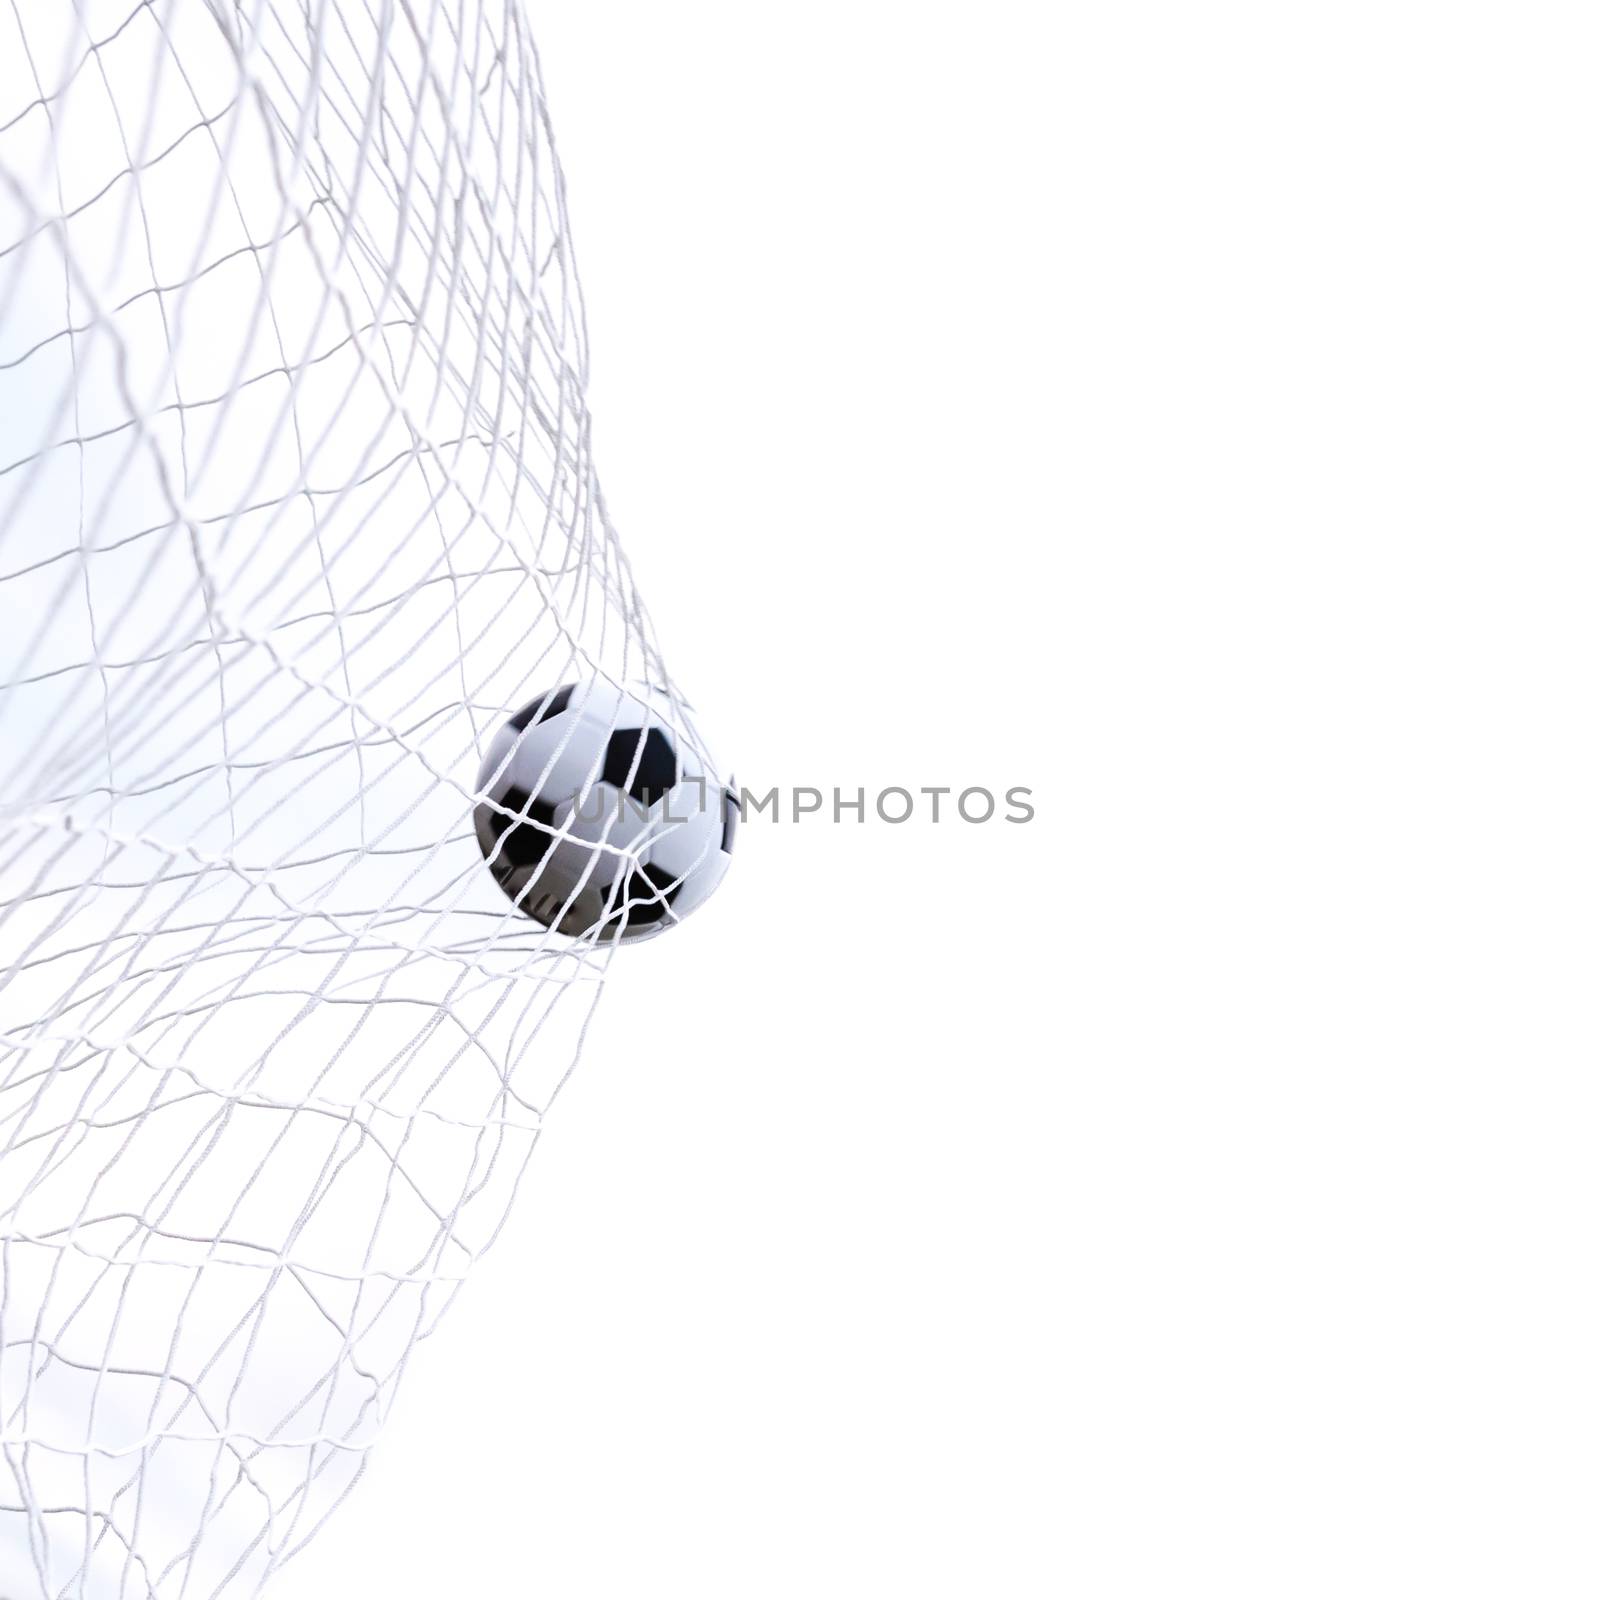 Studio shot moving soccer ball in goal net isolated on white by trongnguyen